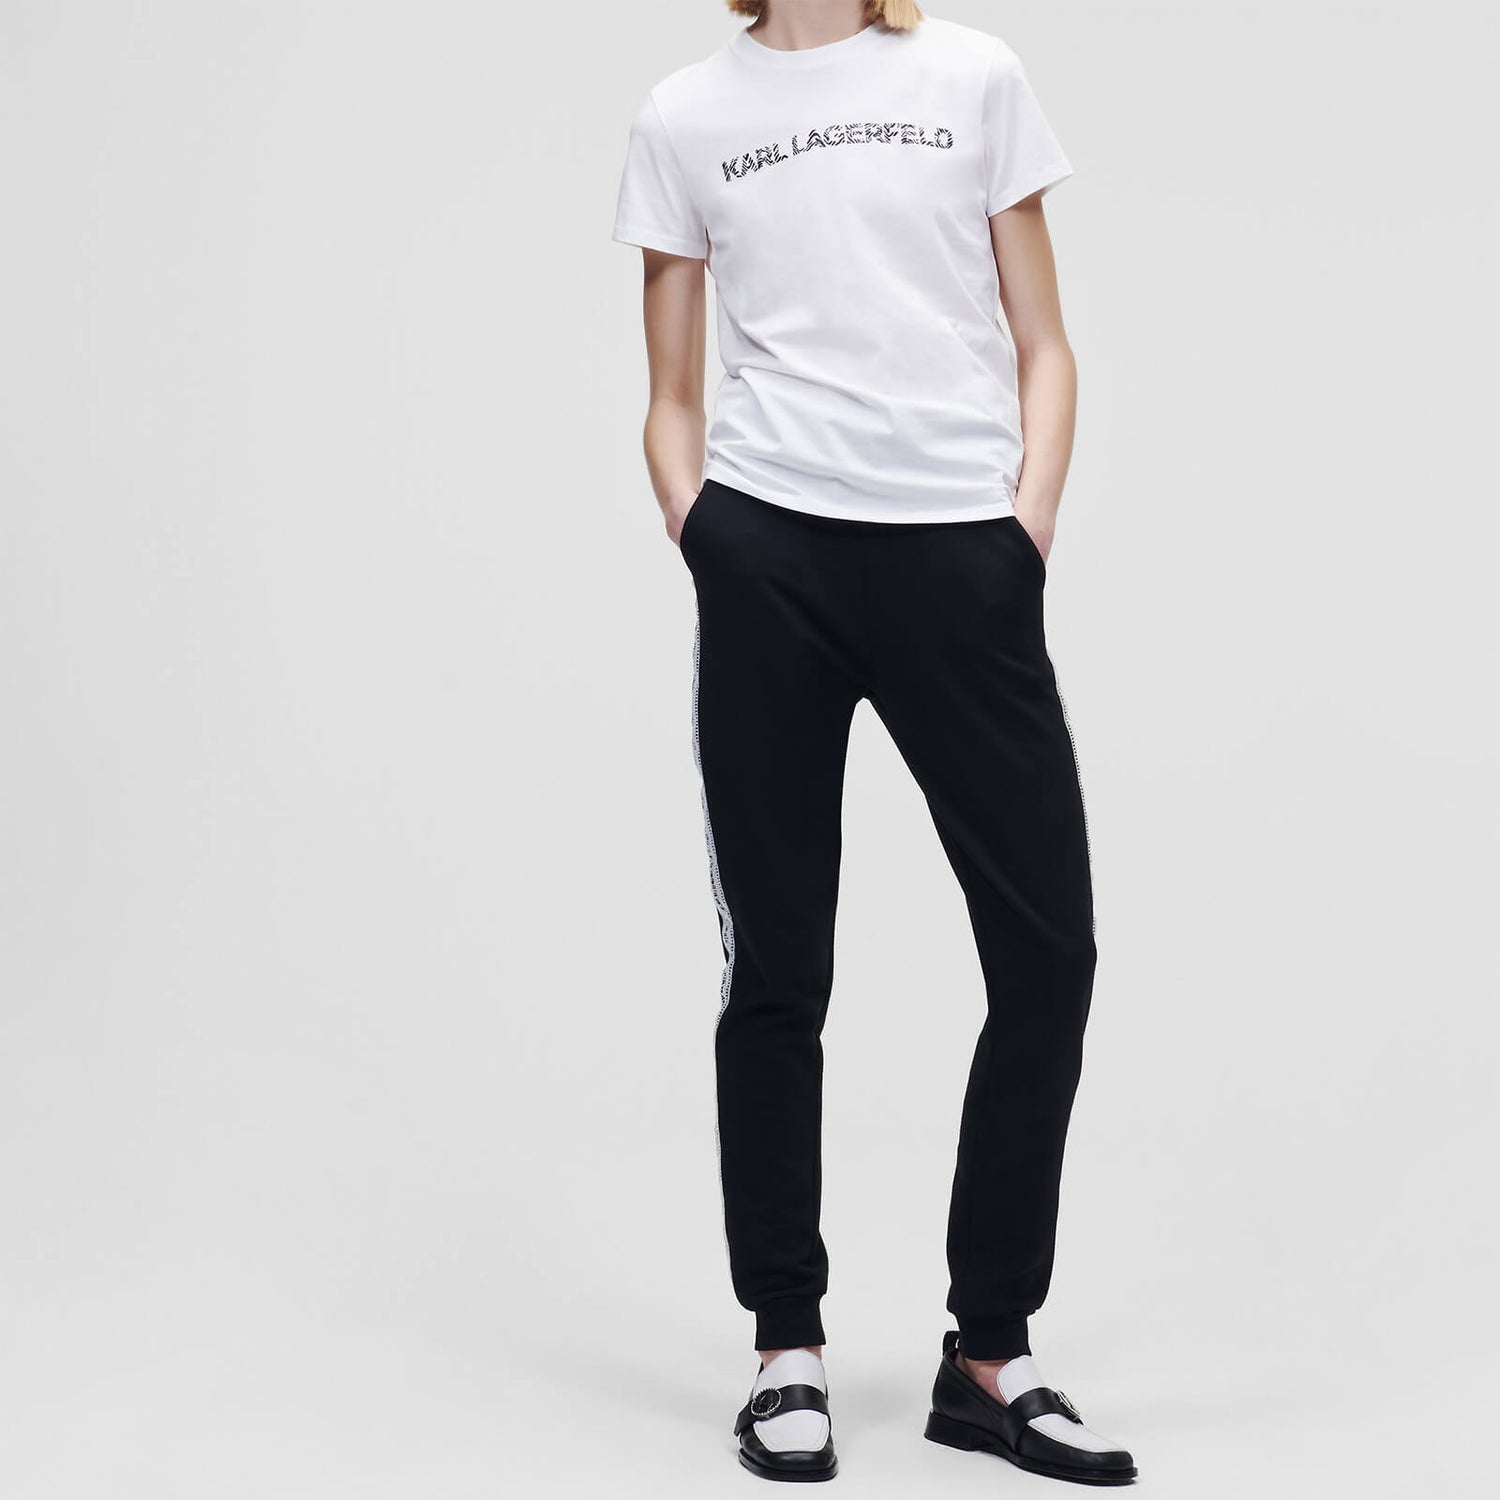 KARL LAGERFELD Women's Elongated Zebra Logo T-Shirt - White - XS